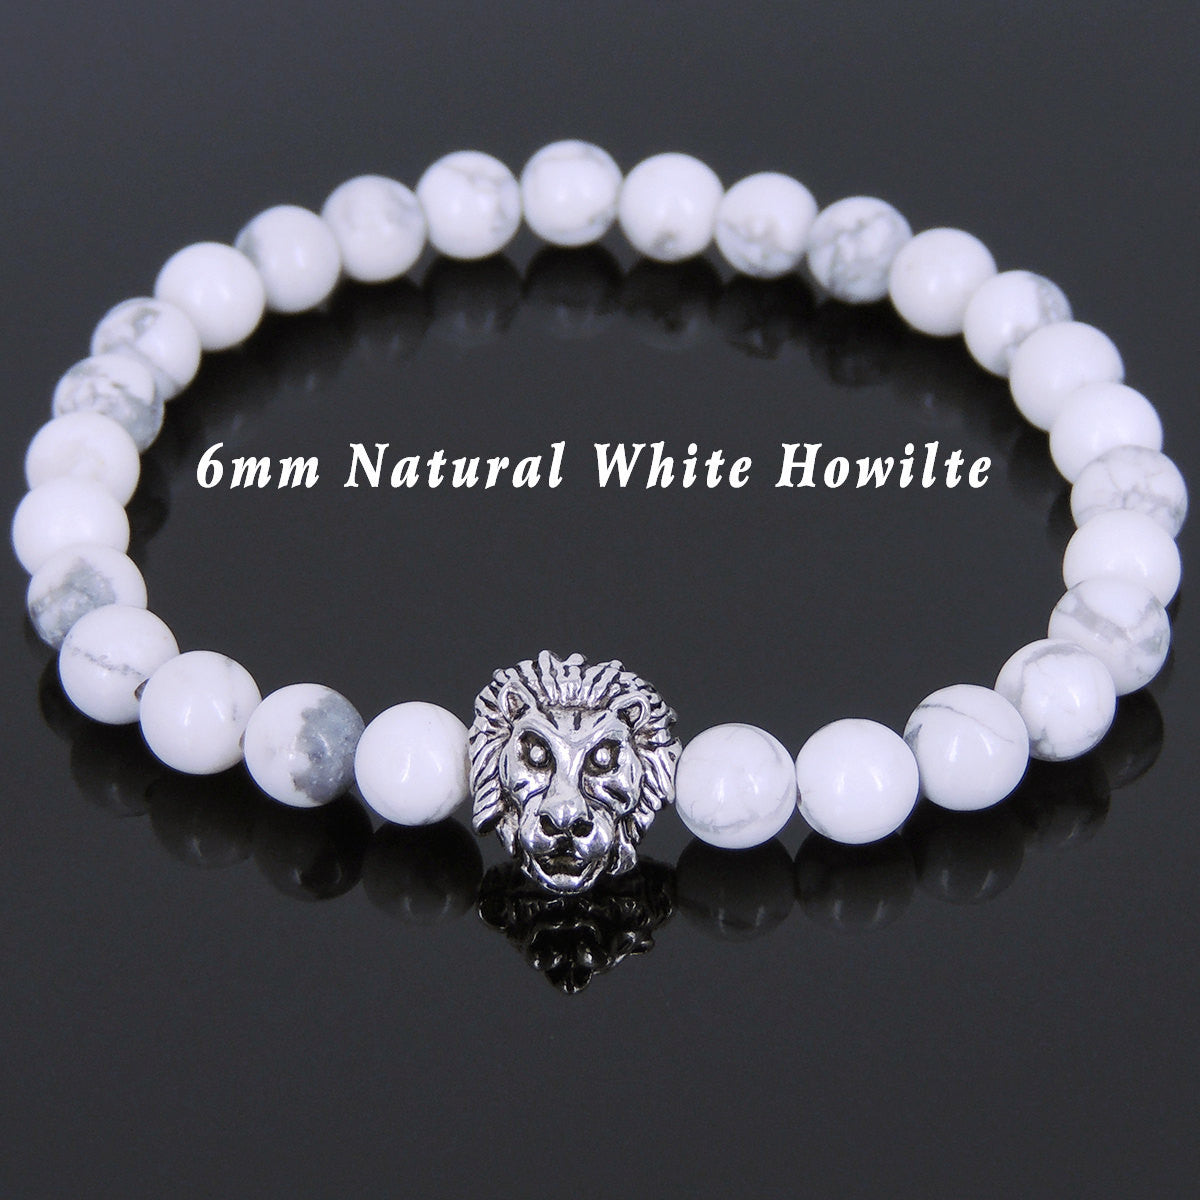 6mm White Howlite Healing Gemstone Bracelet with Vintage Tibetan Silver Lion Head Courage Charm - Handmade by Gem & Silver TSB141